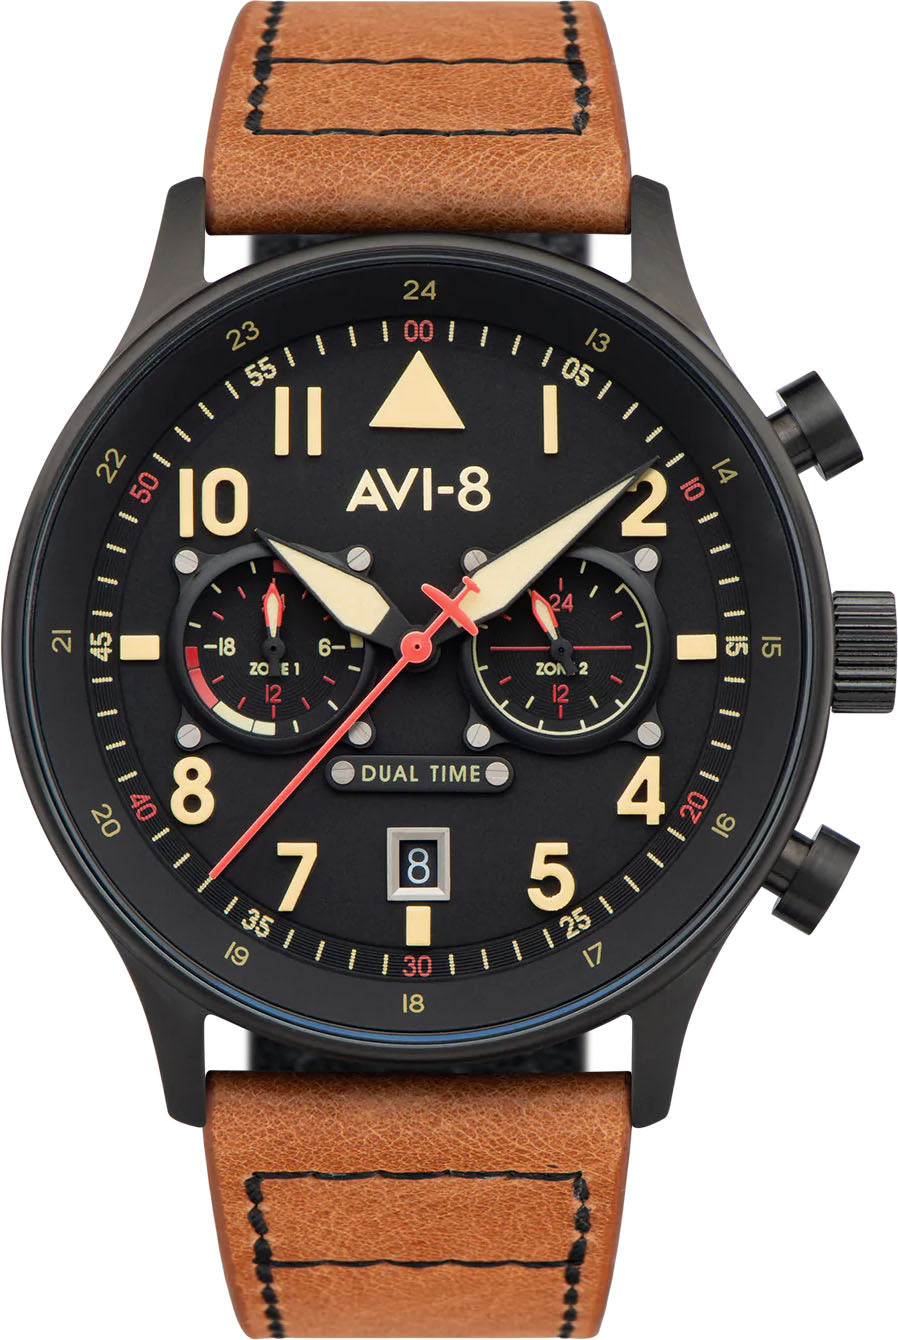 Photos - Wrist Watch AVI-8 Watch Hawker Hurricane Carey Dual Time Debden - Black AV-138 